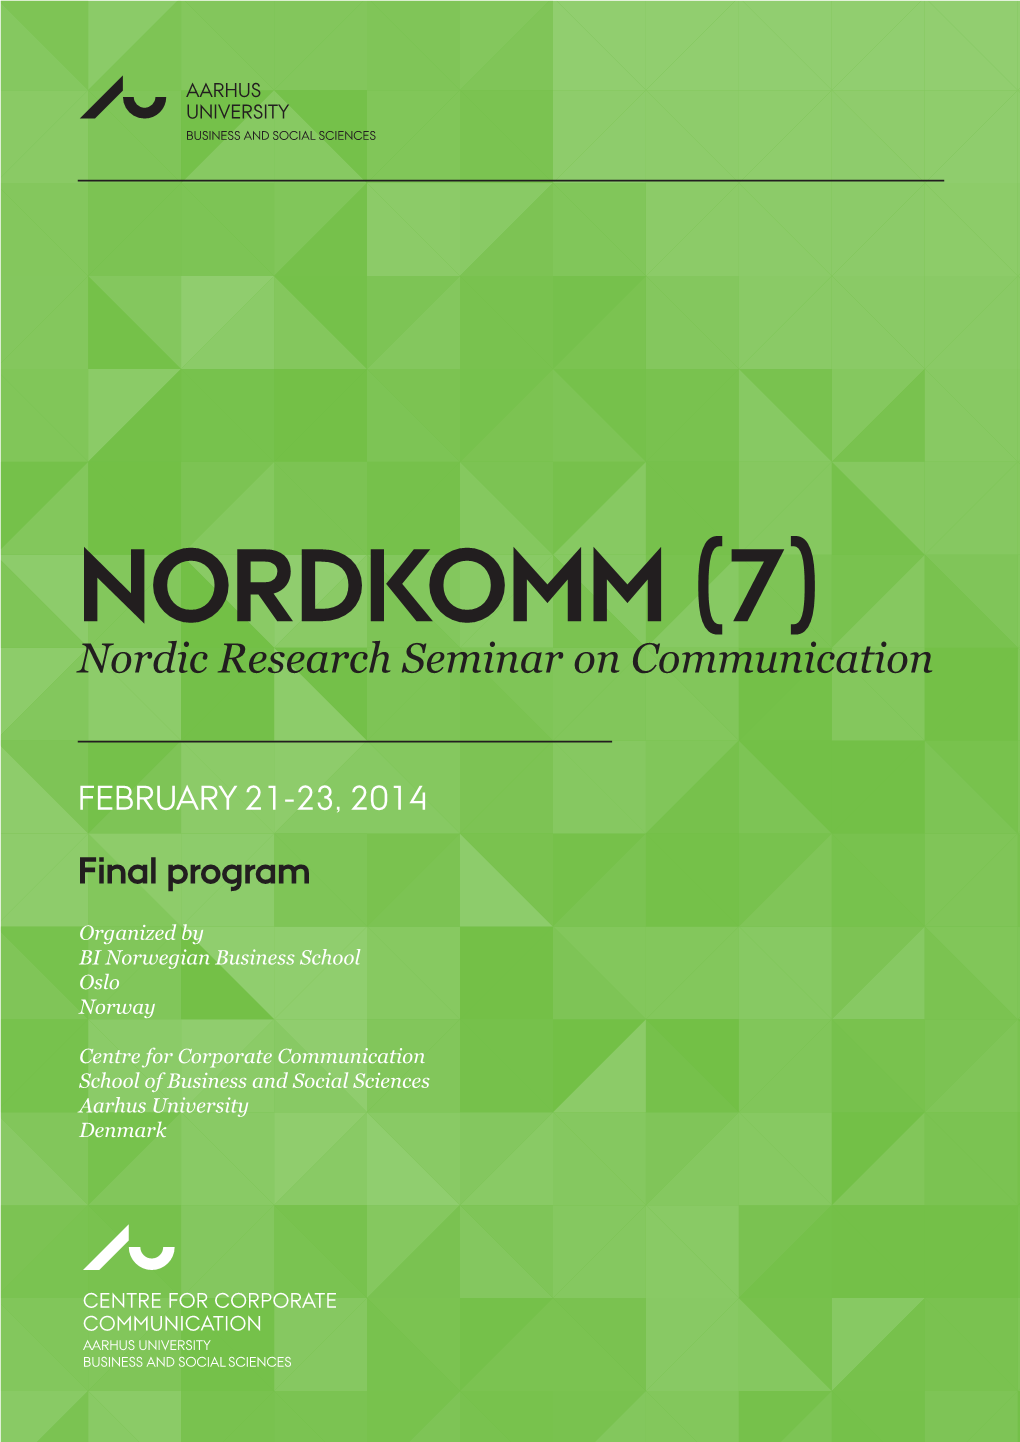 NORDKOMM (7) Nordic Research Seminar on Communication